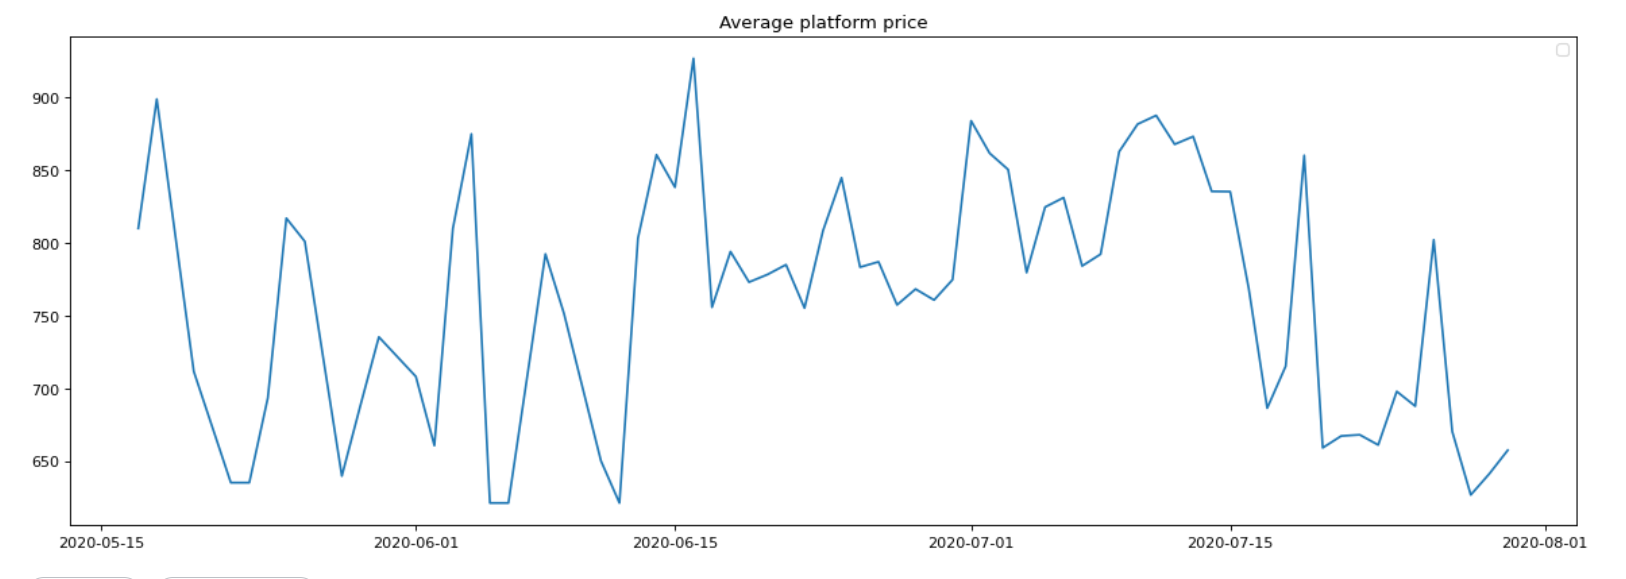 Average Platform Price 